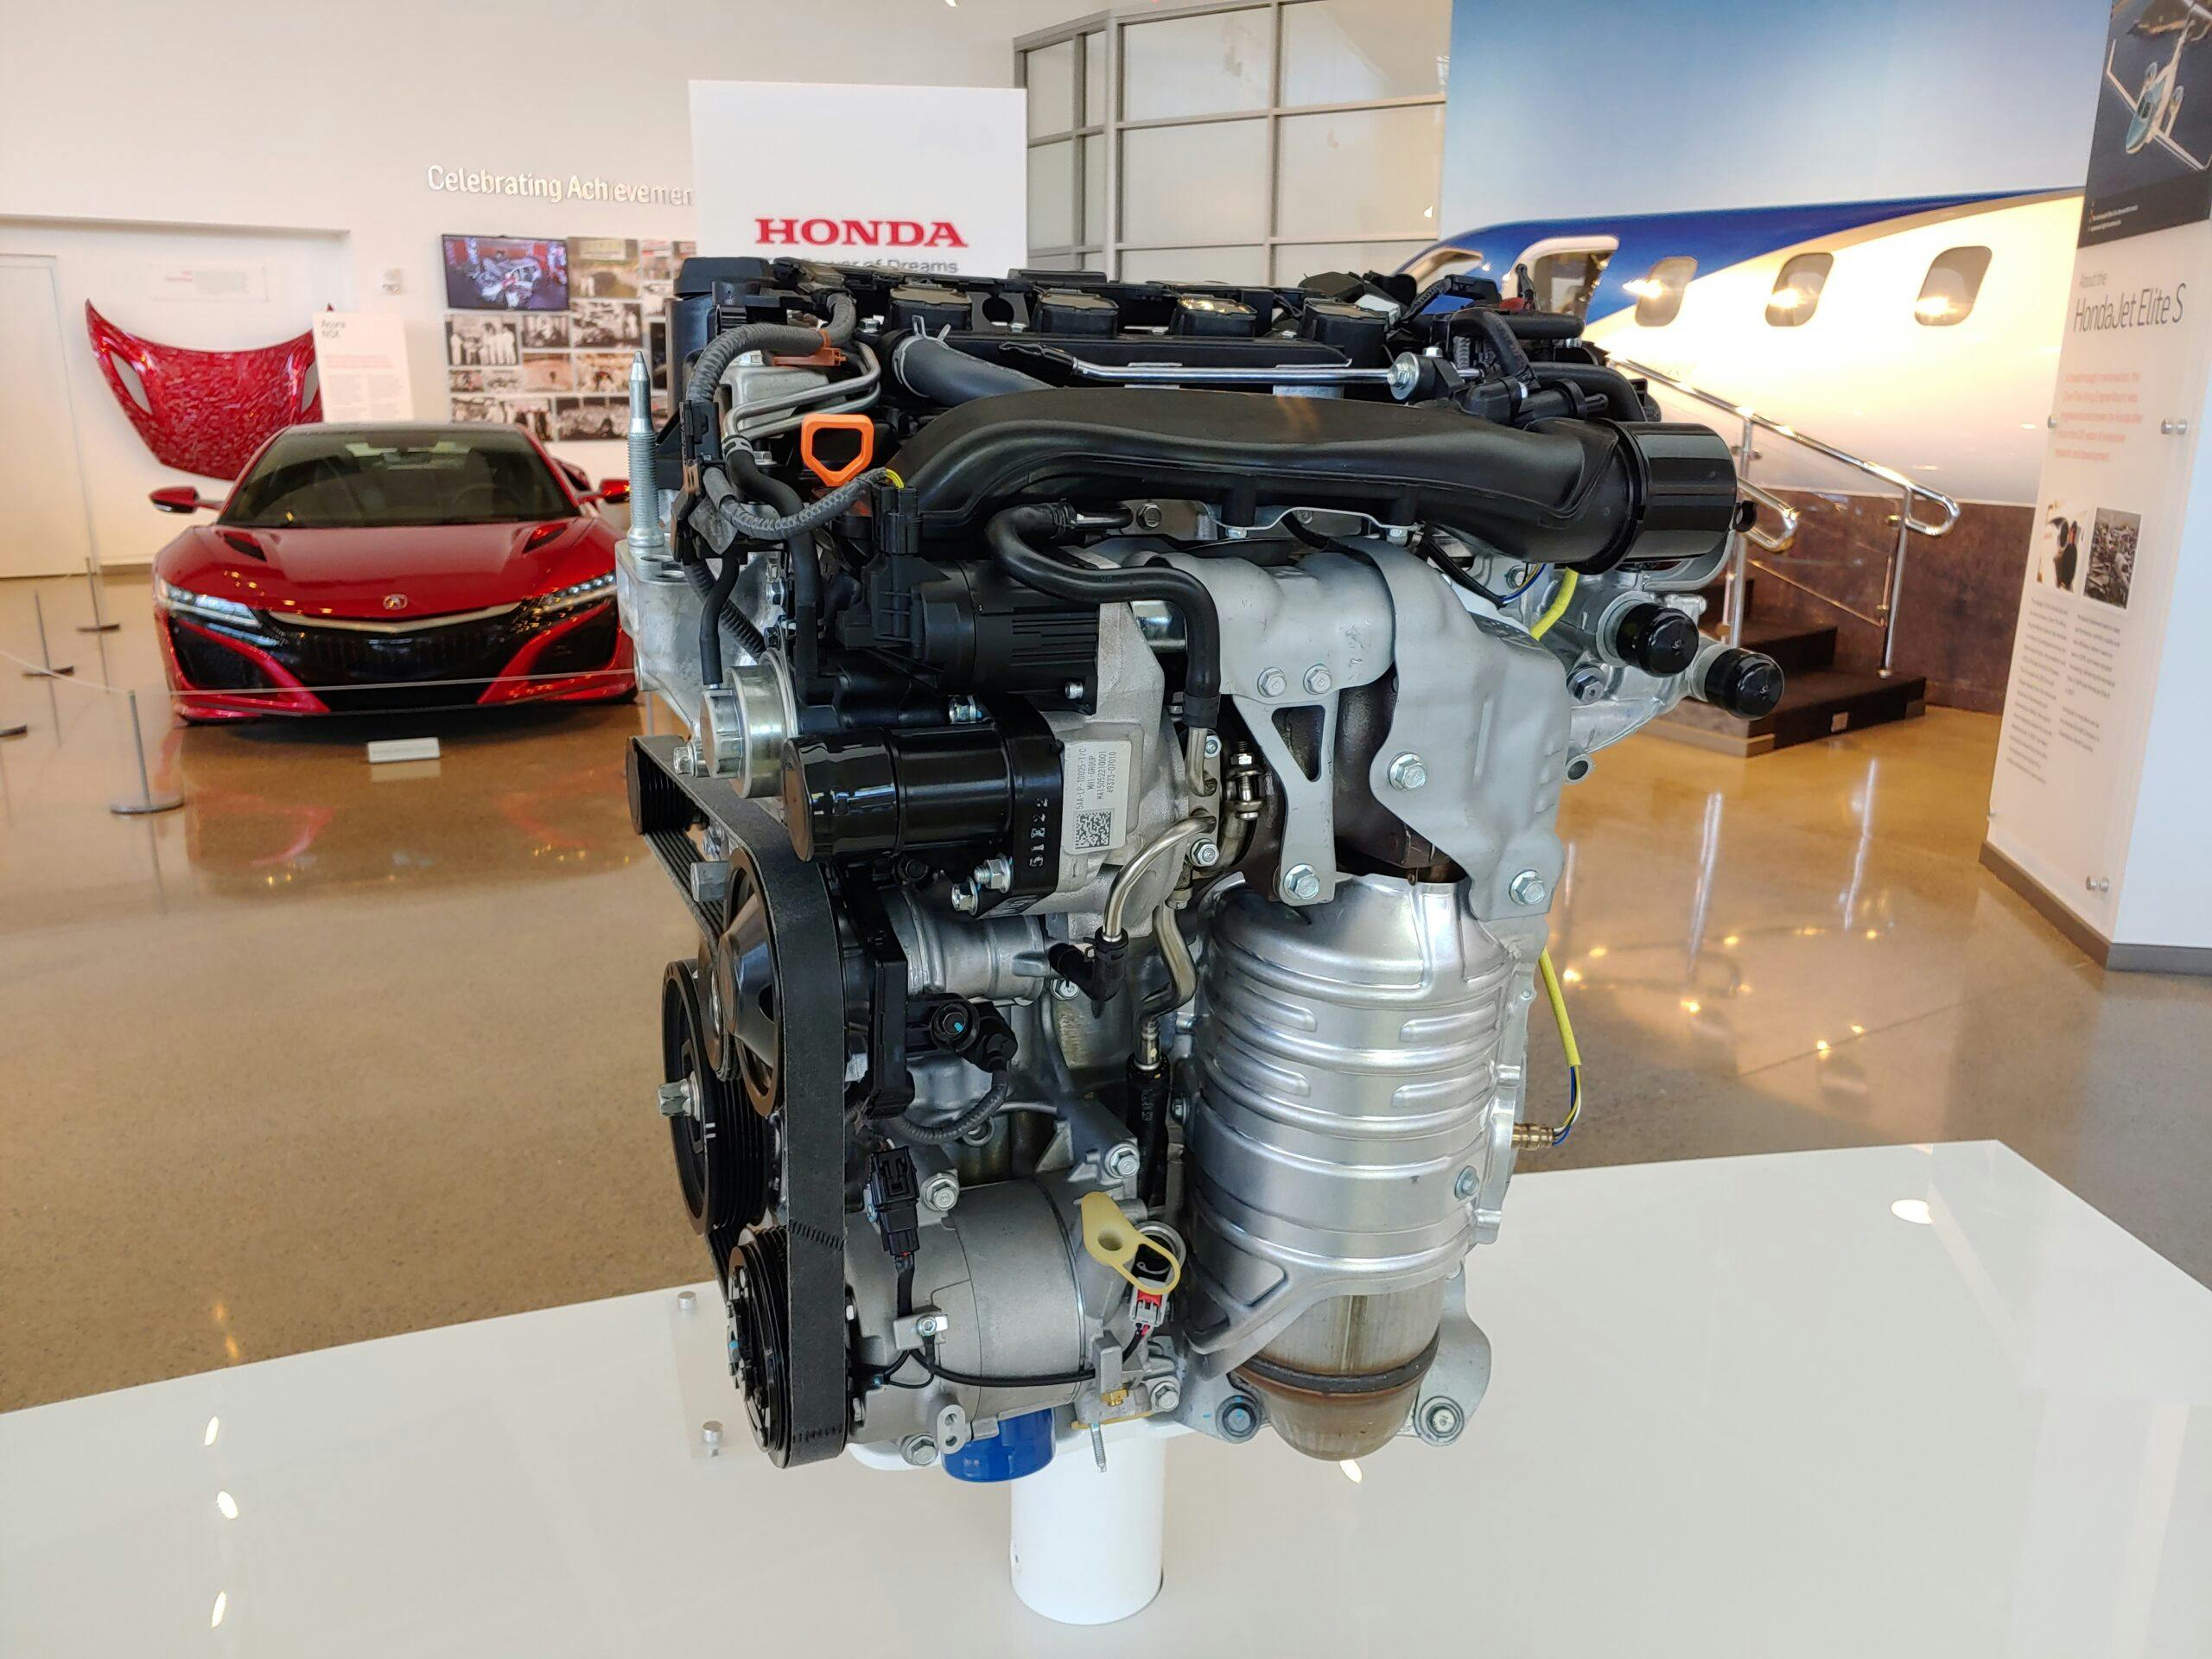 Honda Heritage Center engine display